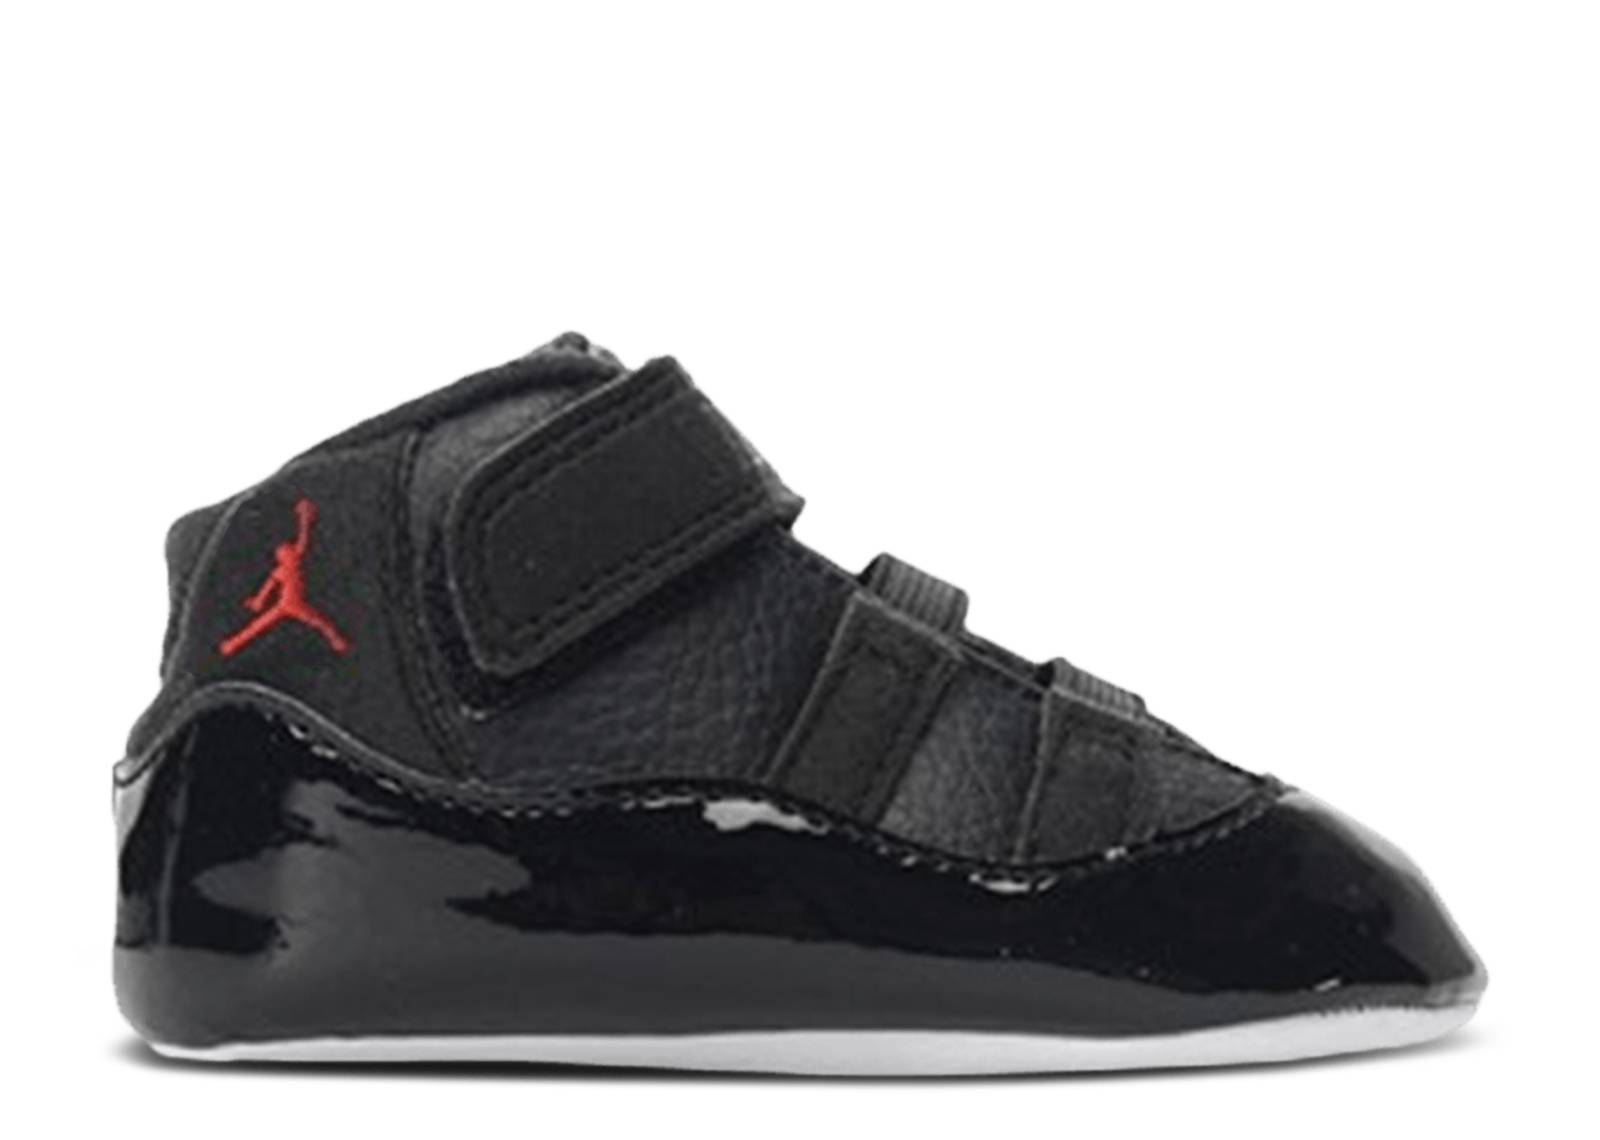 Air Jordan 11 Retro Infant Gift Pack 'Black'